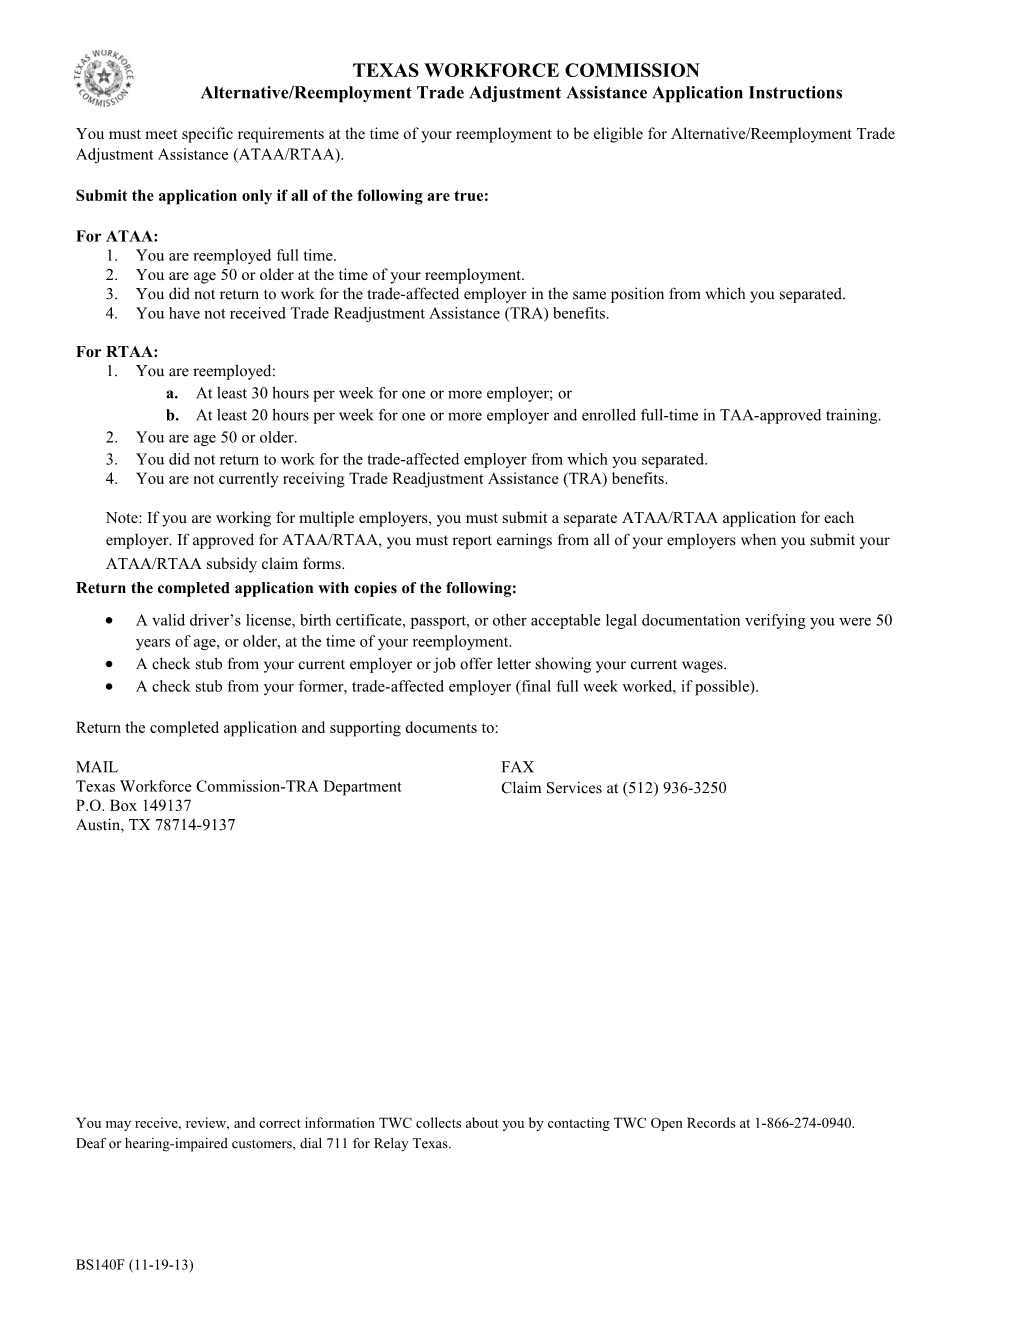 Form BS140F: Alternative/Reemployment Trade Adjustment Assistance Application